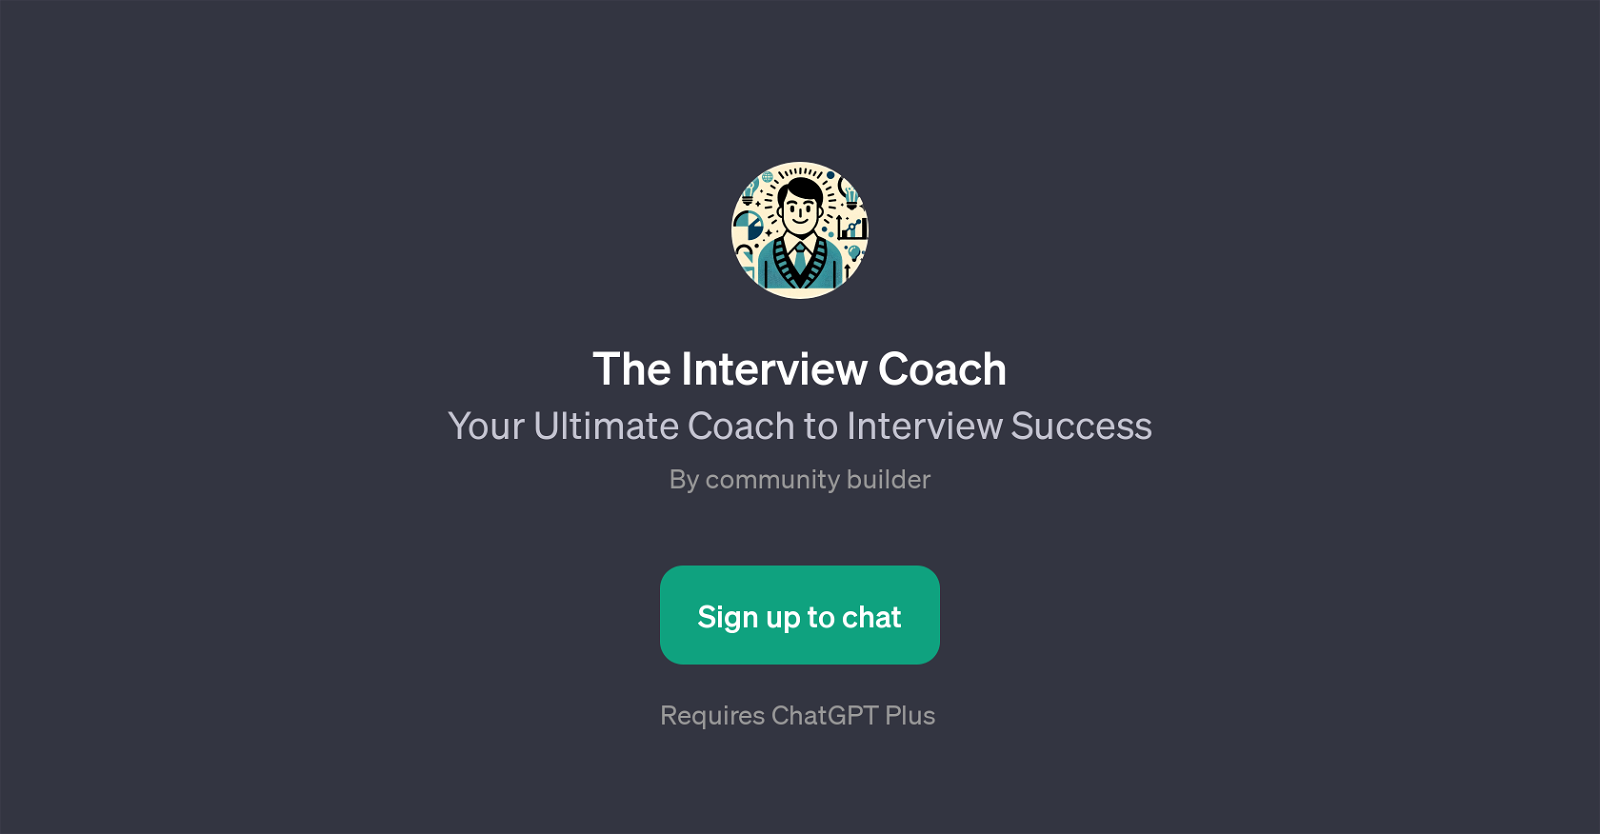 The Interview Coach website